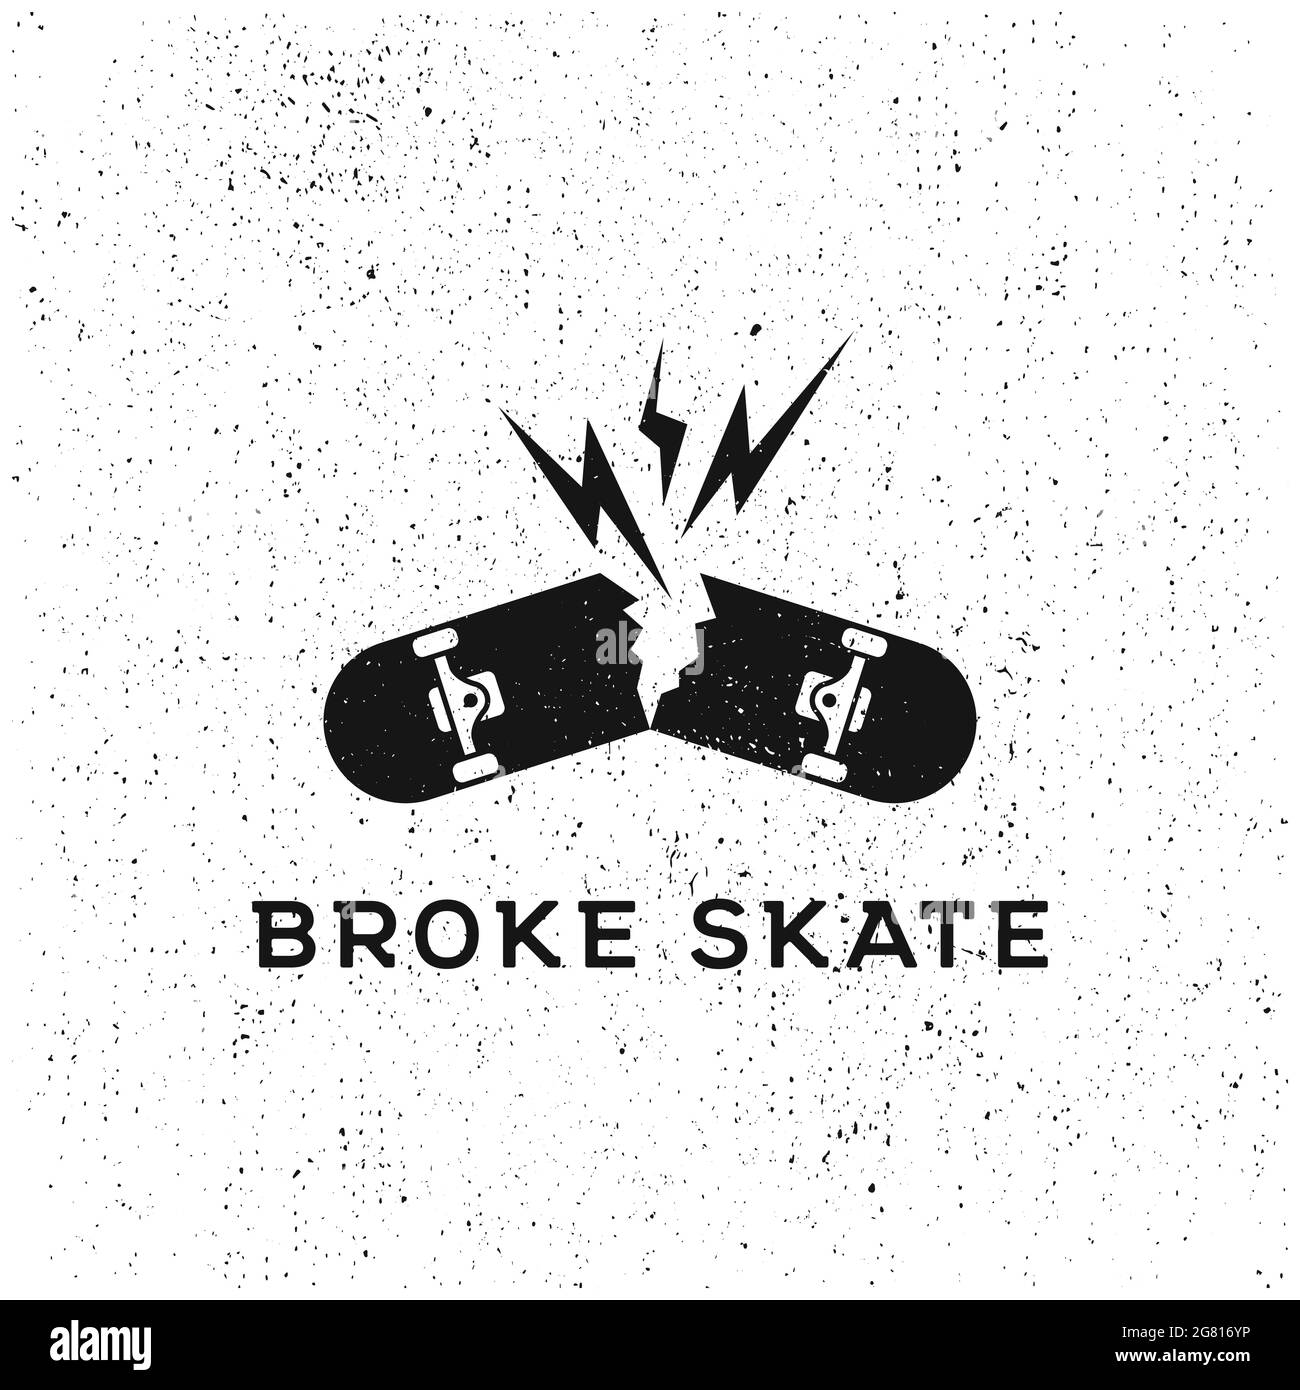 Skateboard design Banque d'images noir et blanc - Alamy